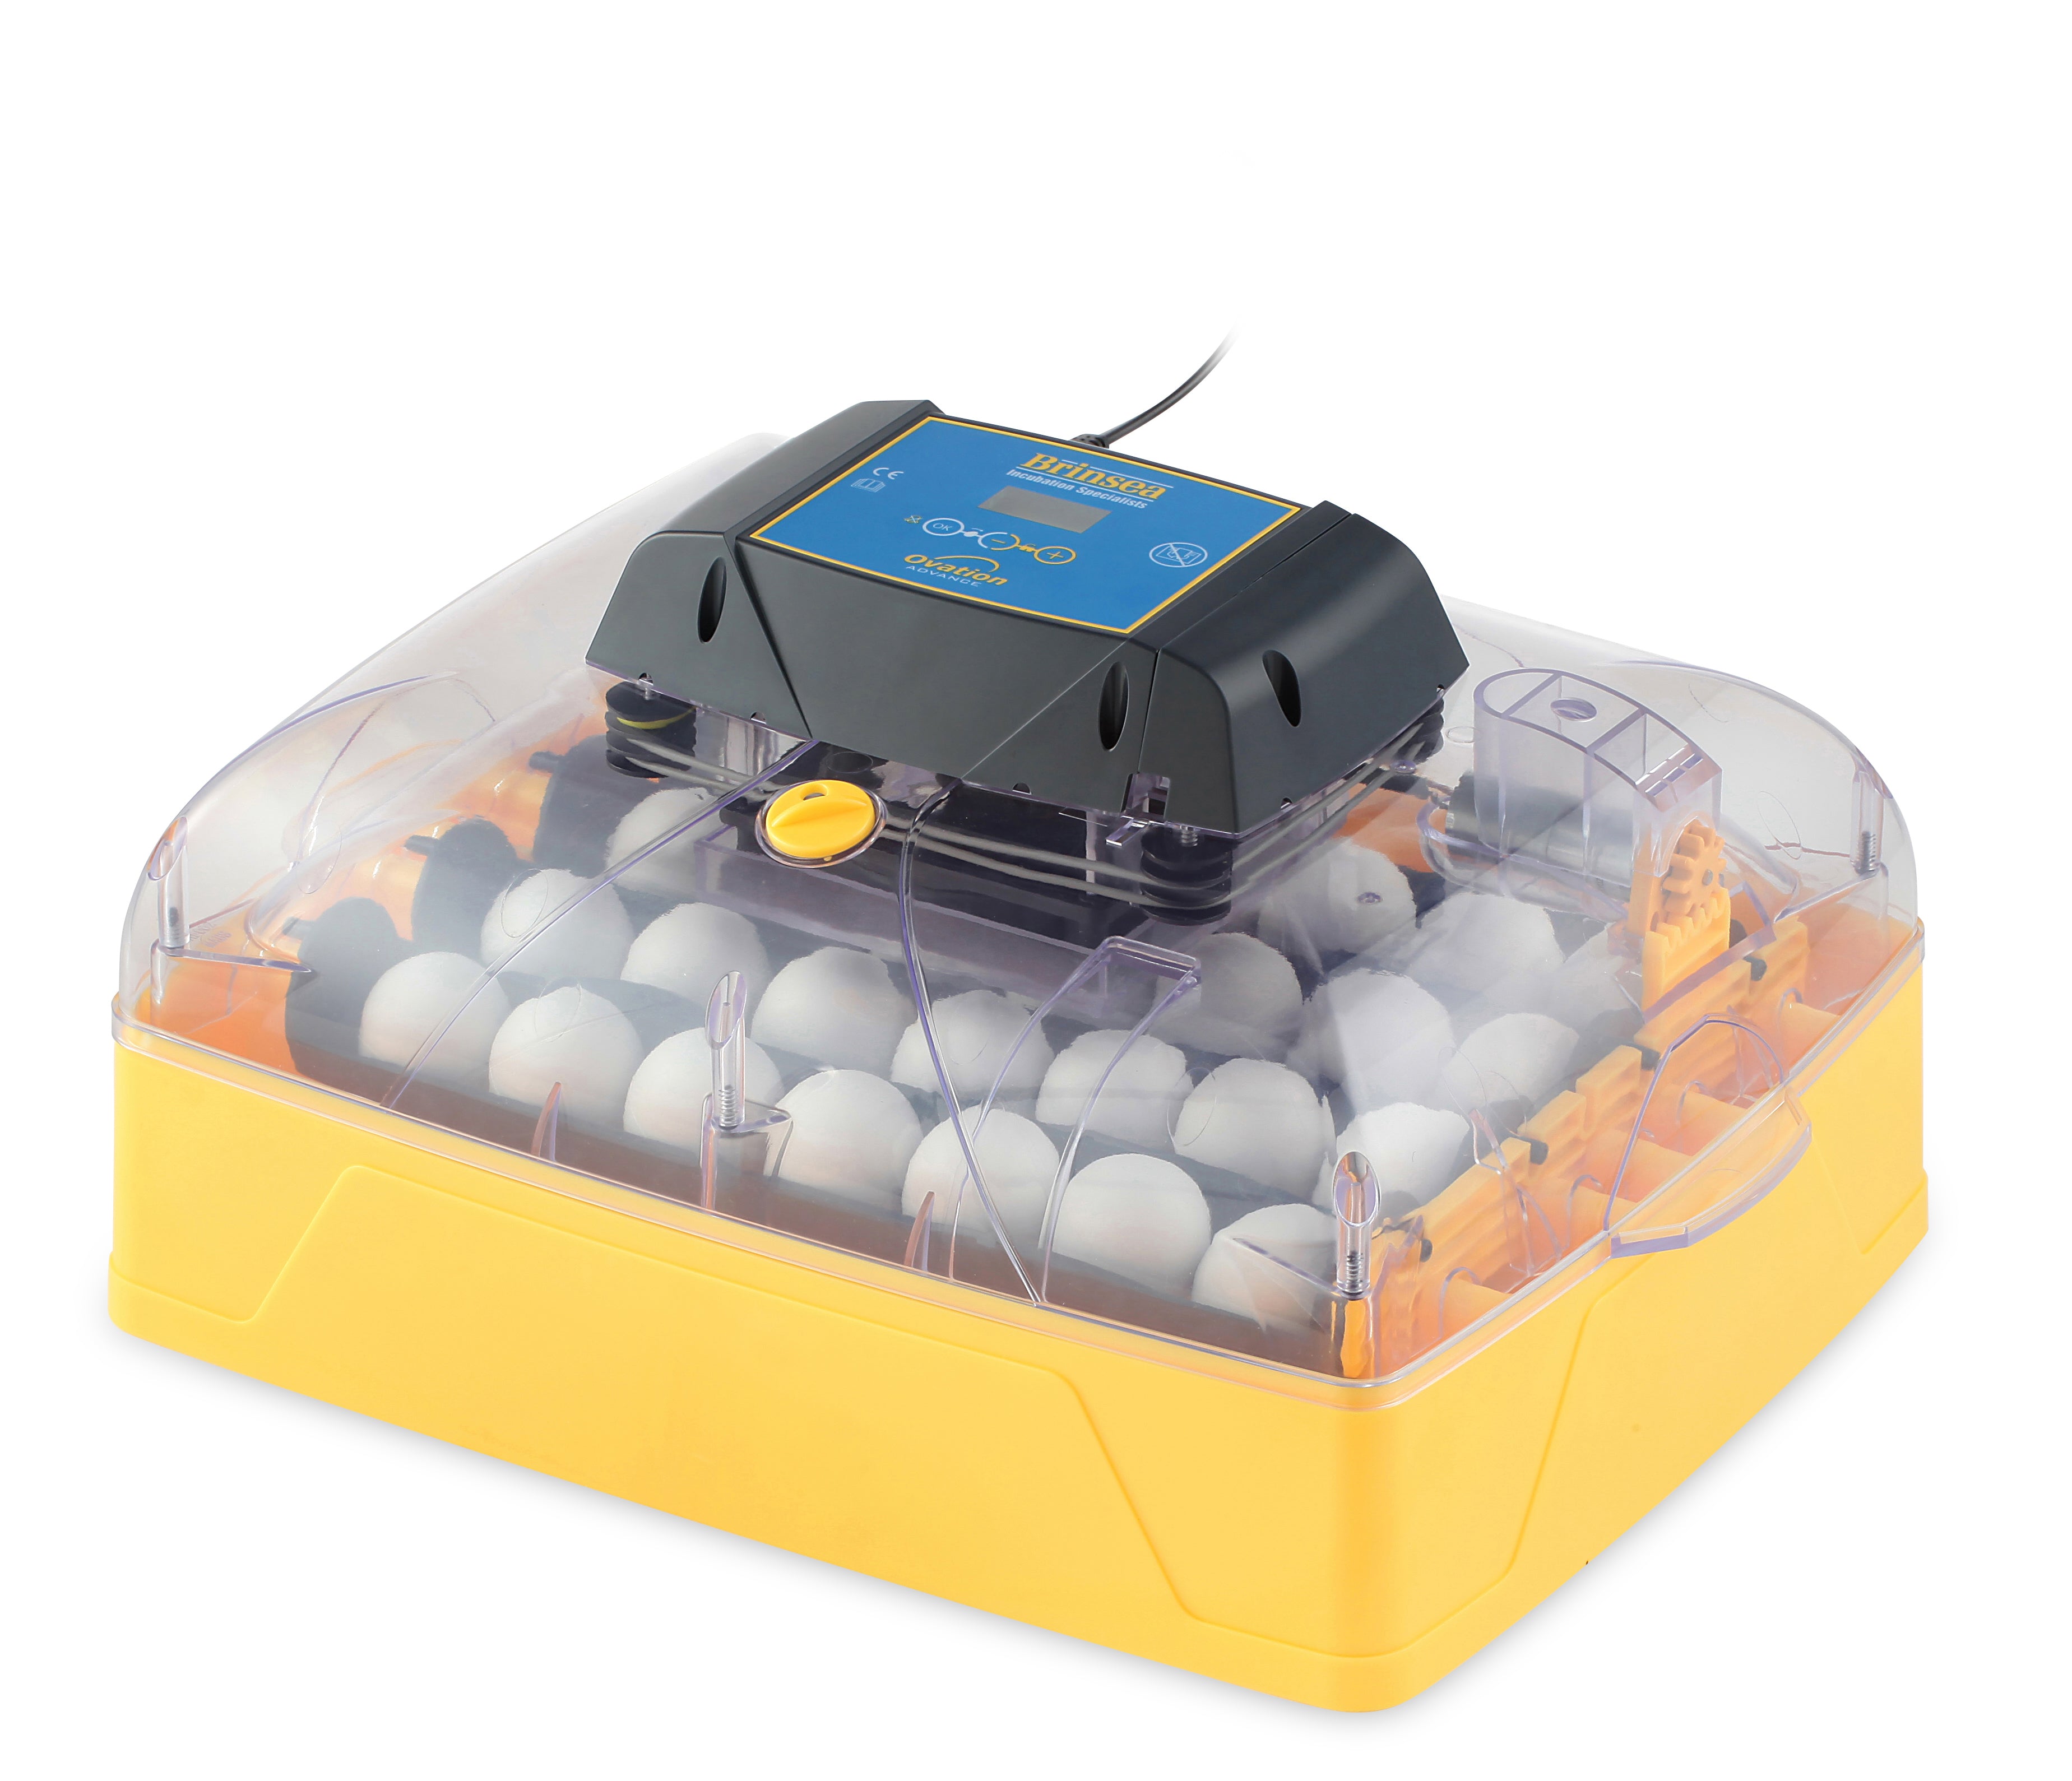 Egg-Incubator "Brinsea Ovation 28 Advance EX"